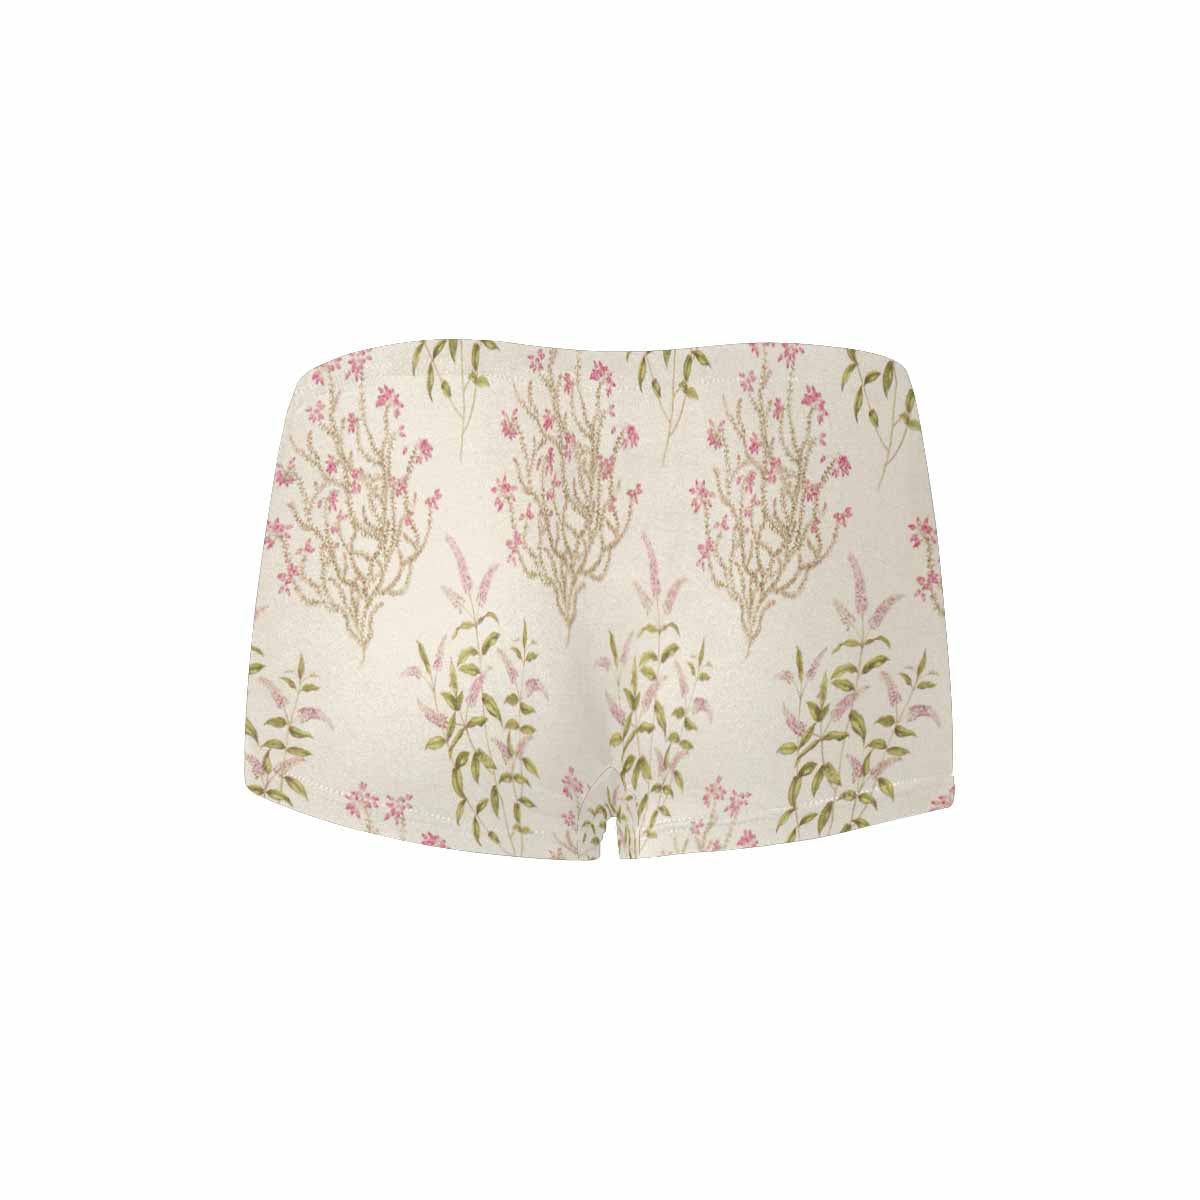 Floral 2, boyshorts, daisy dukes, pum pum shorts, panties, design 23